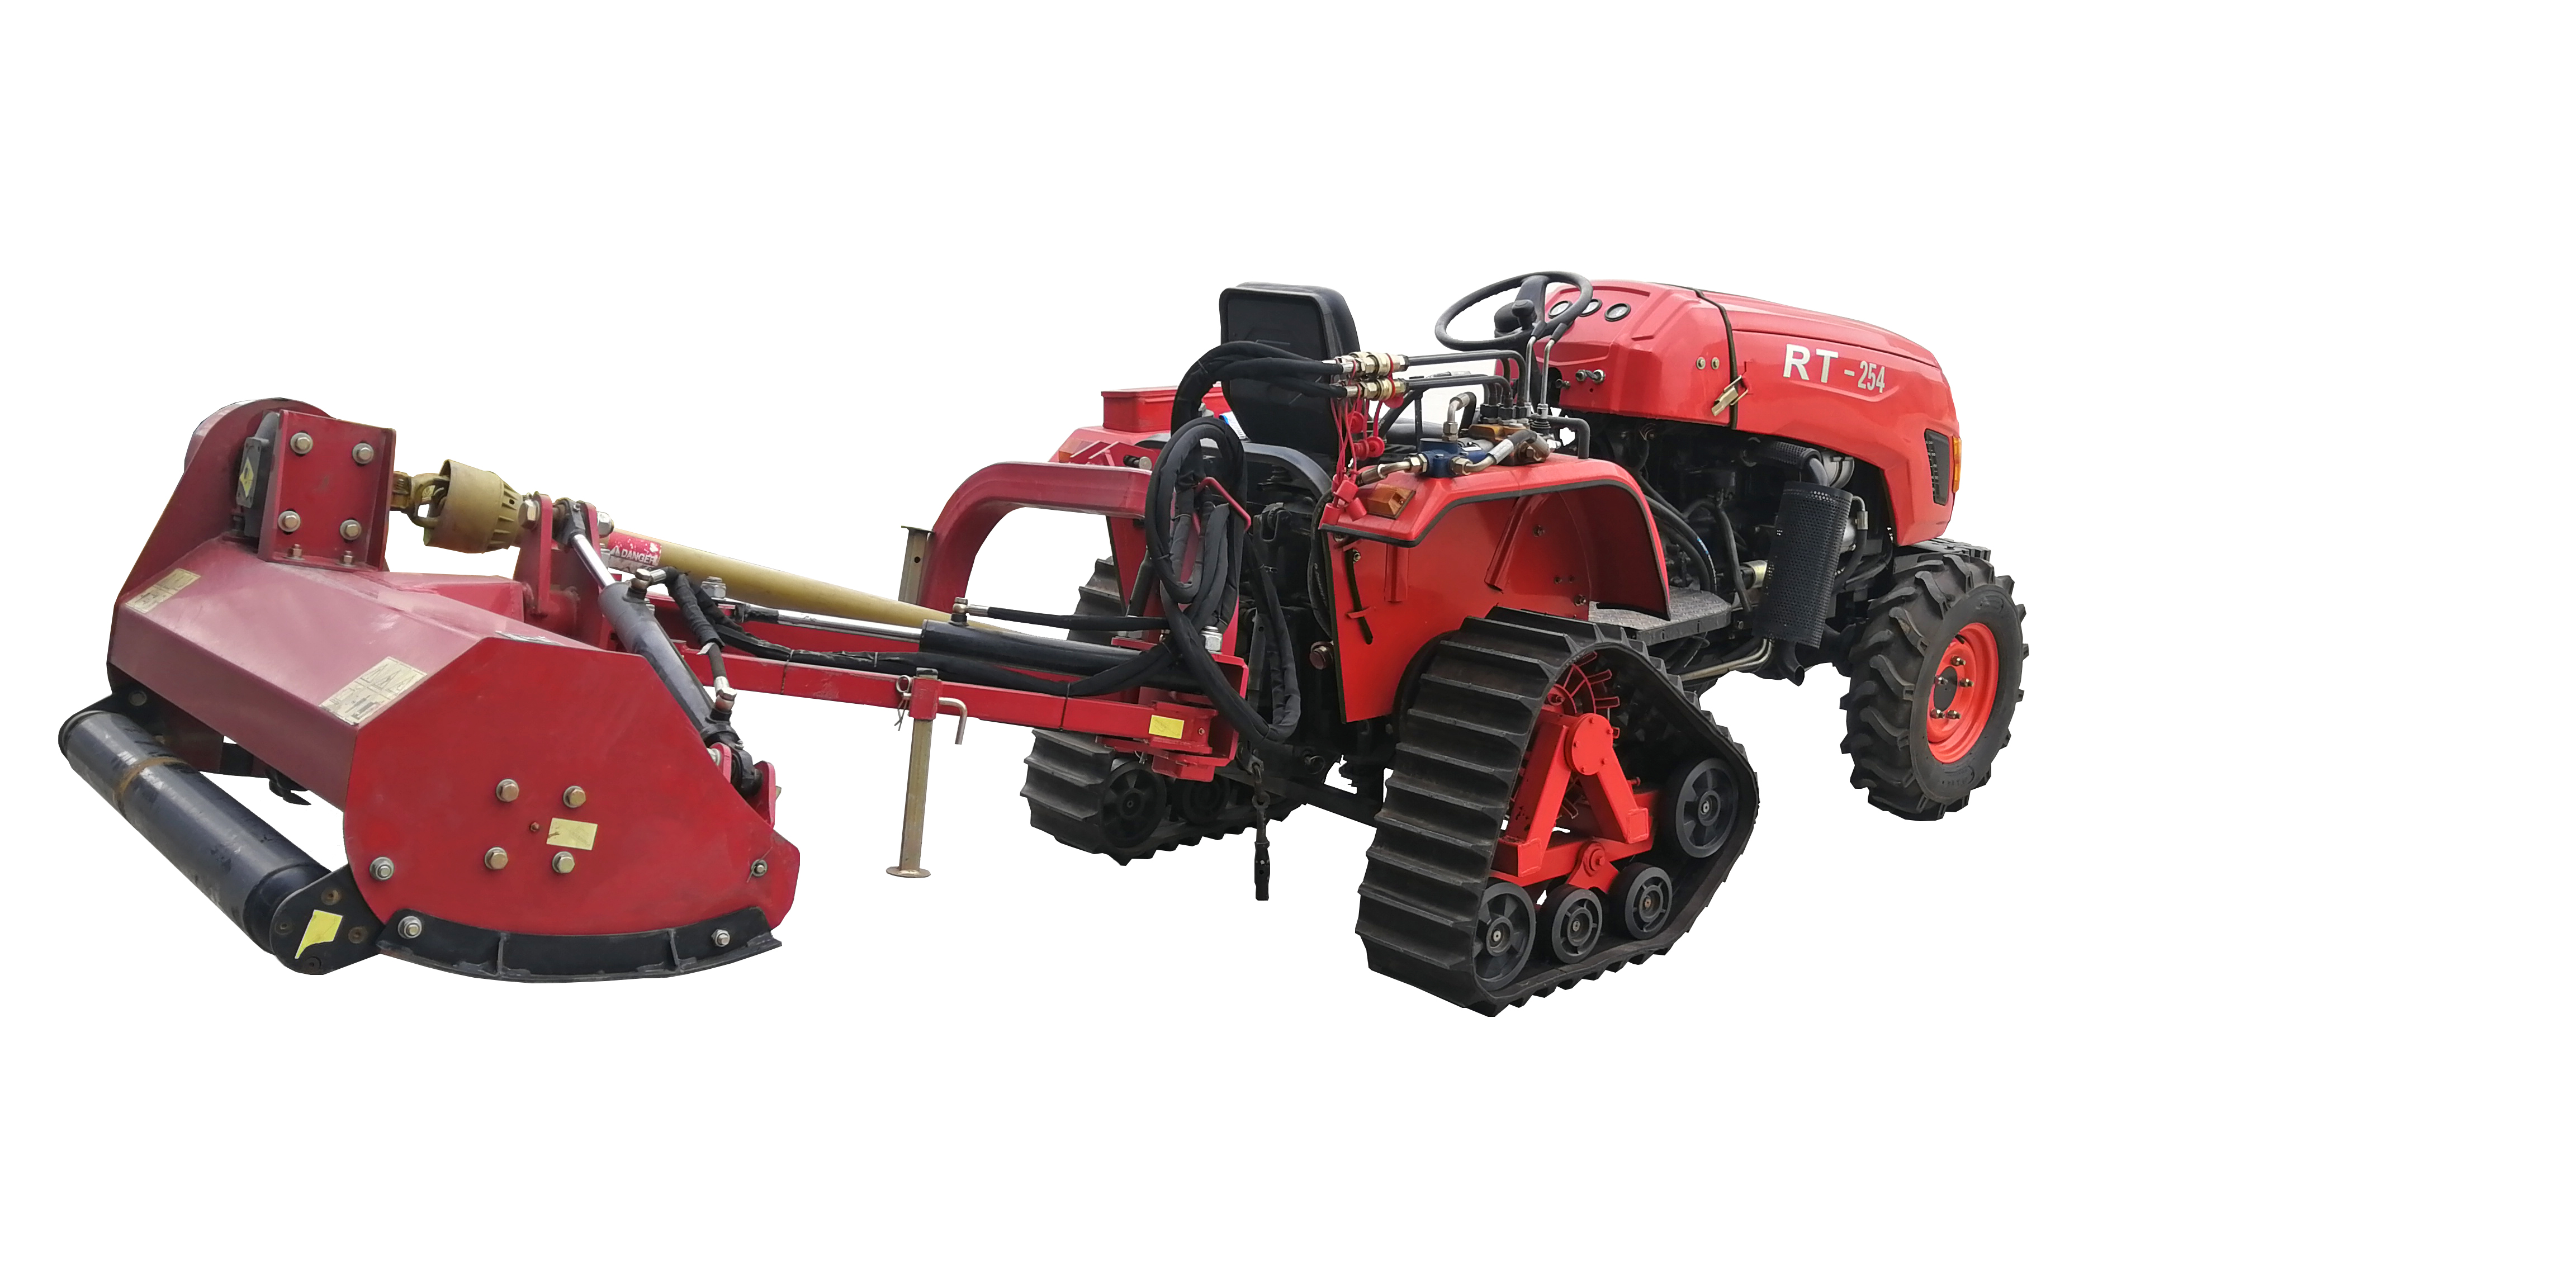 LD 20-40HP caterpillar tractor